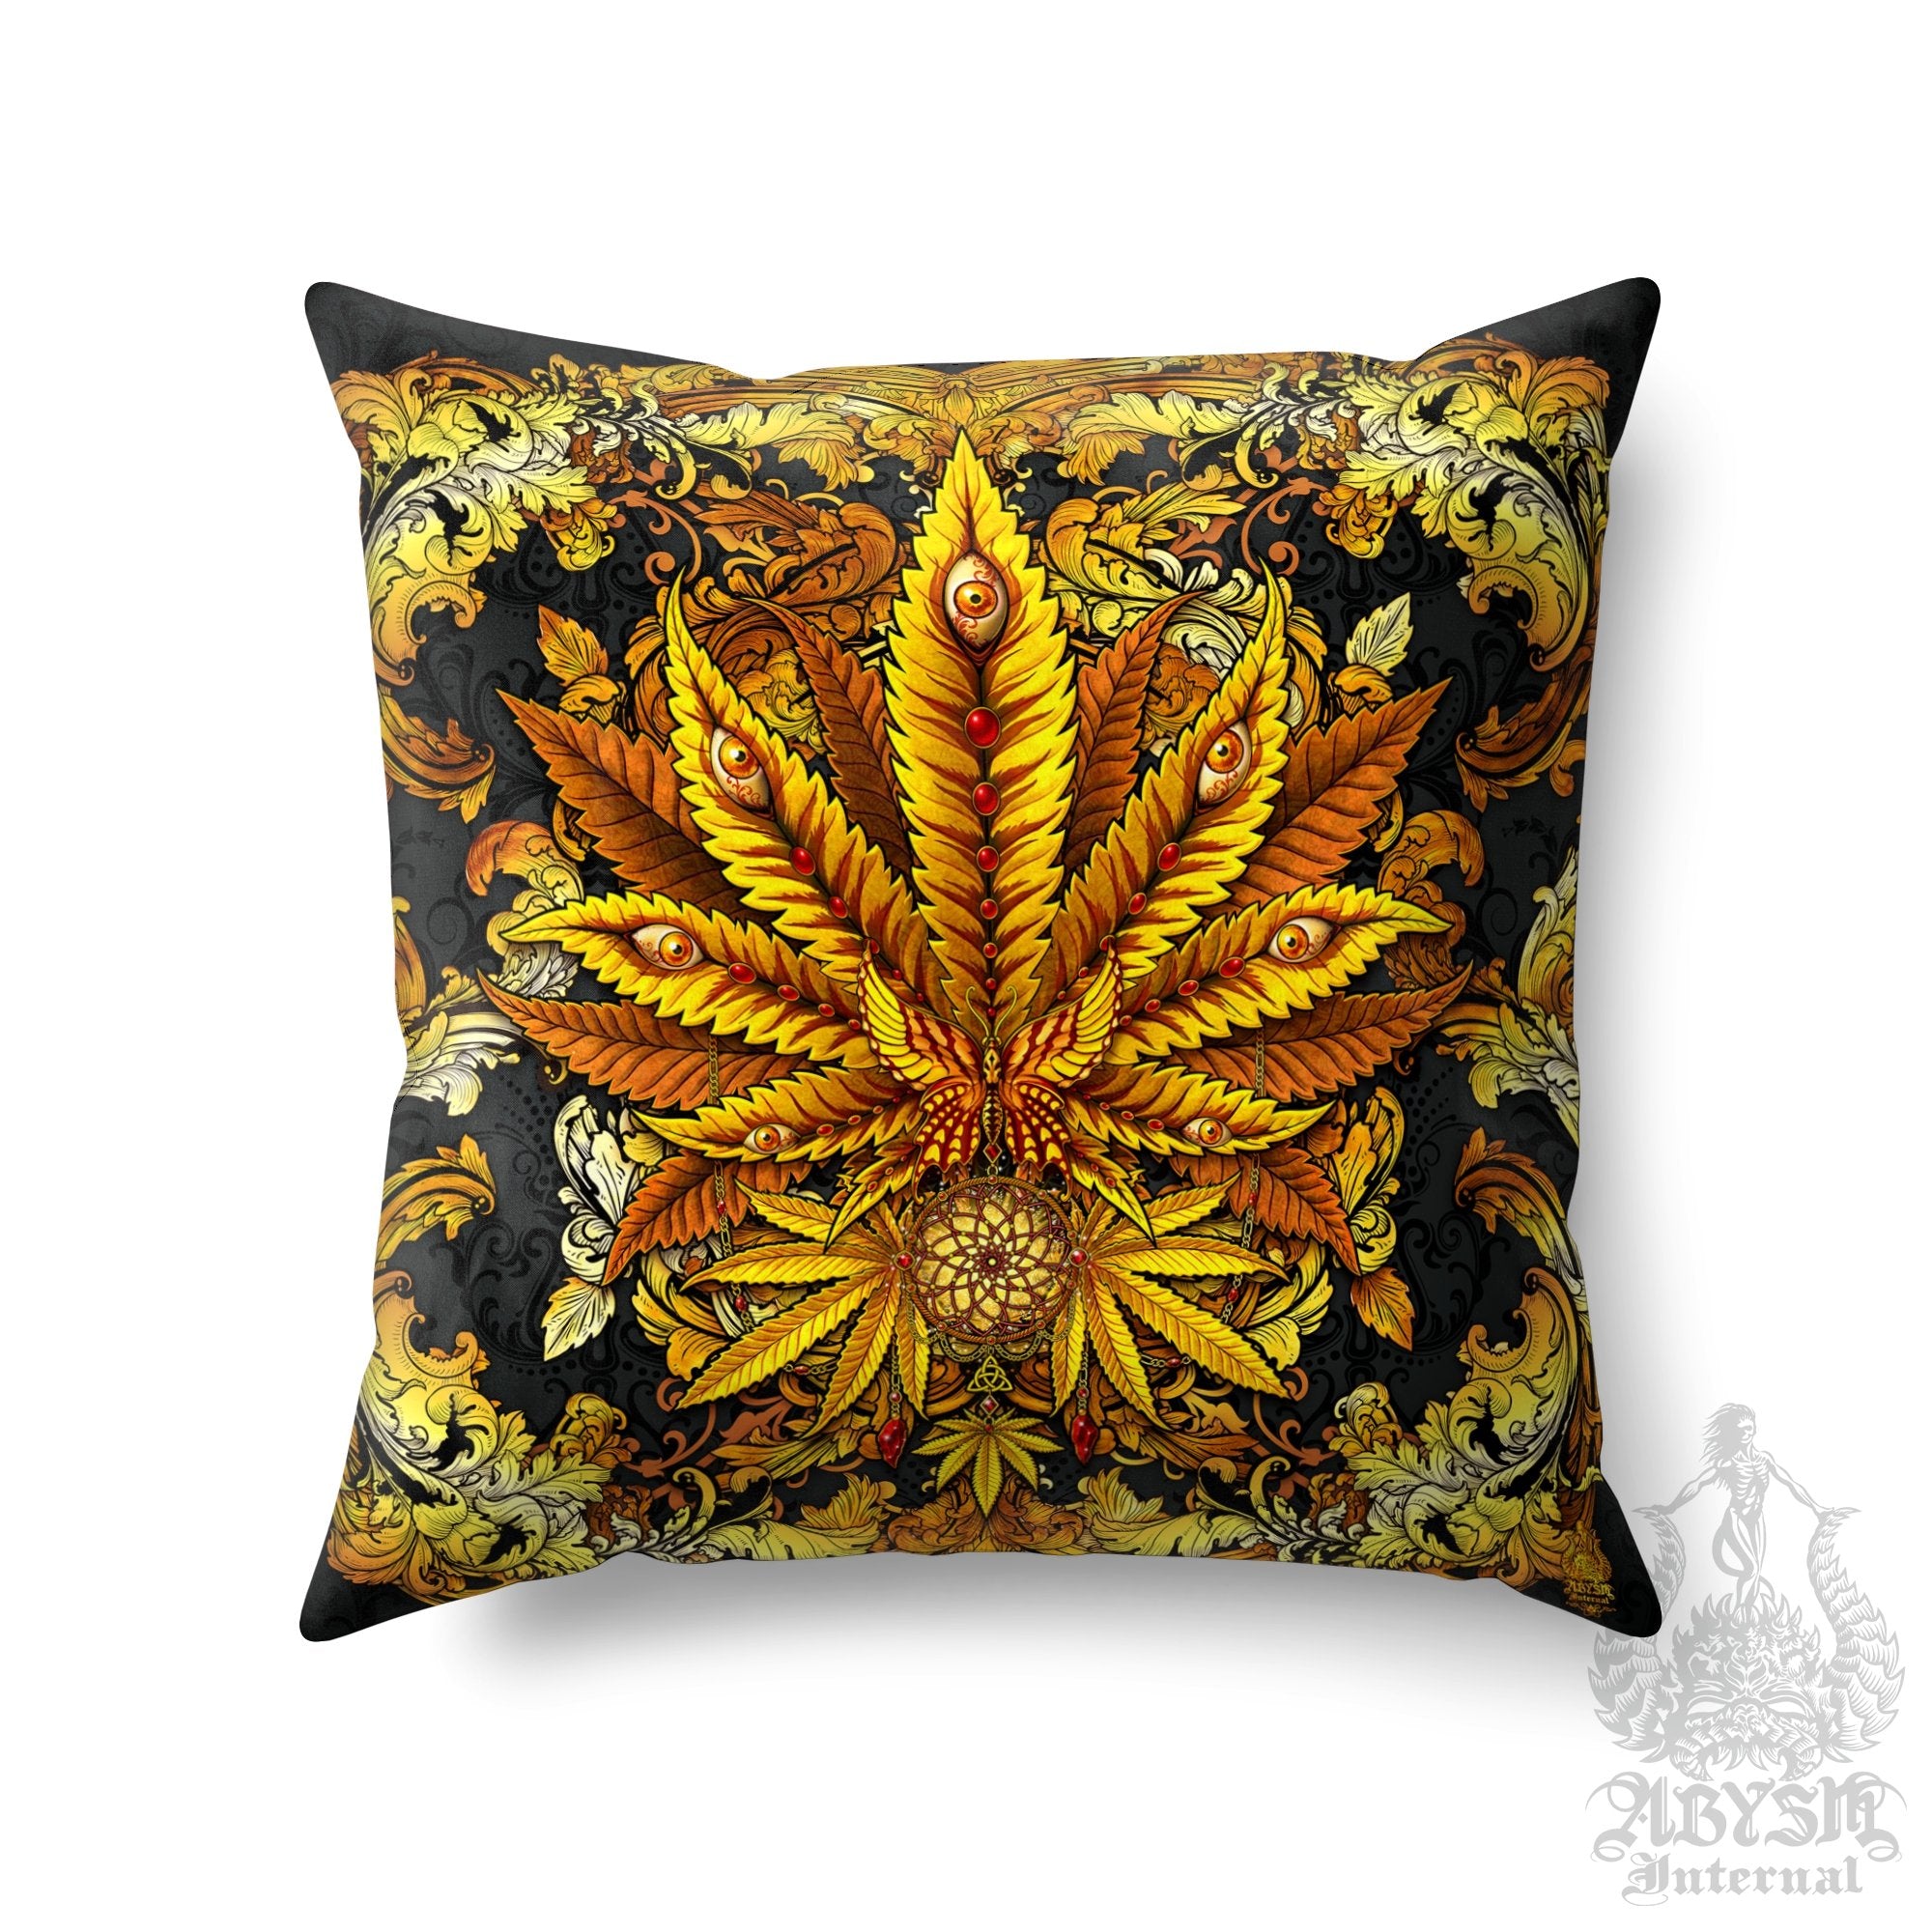 Weed Throw Pillow, Cannabis Shop Decor, Indie Decorative Accent Cushion, Alternative Room Decor, 420 Art Print - Gold - Abysm Internal